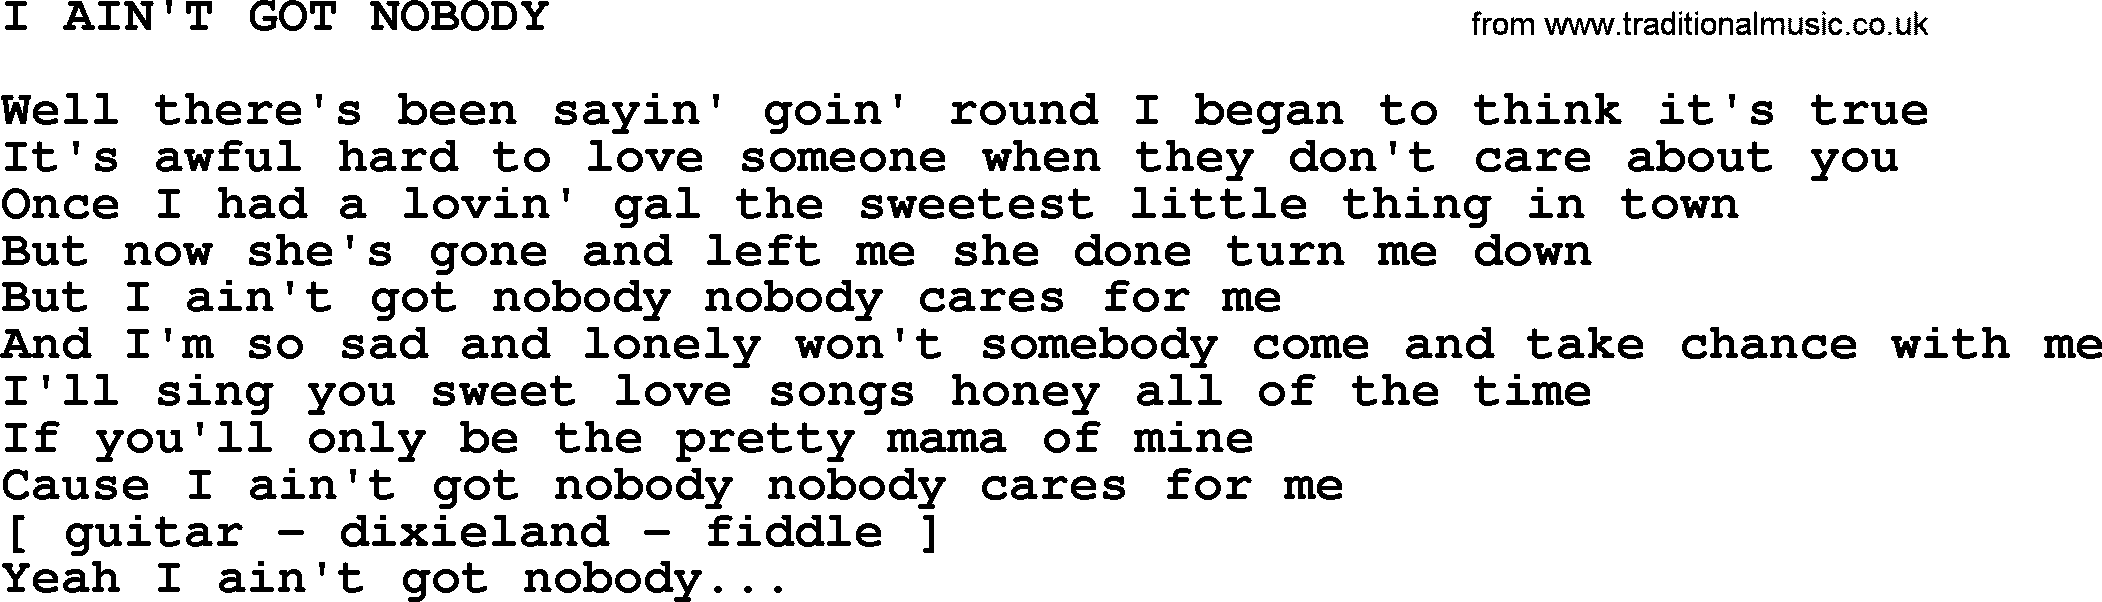 Merle Haggard song: I Ain't Got Nobody, lyrics.